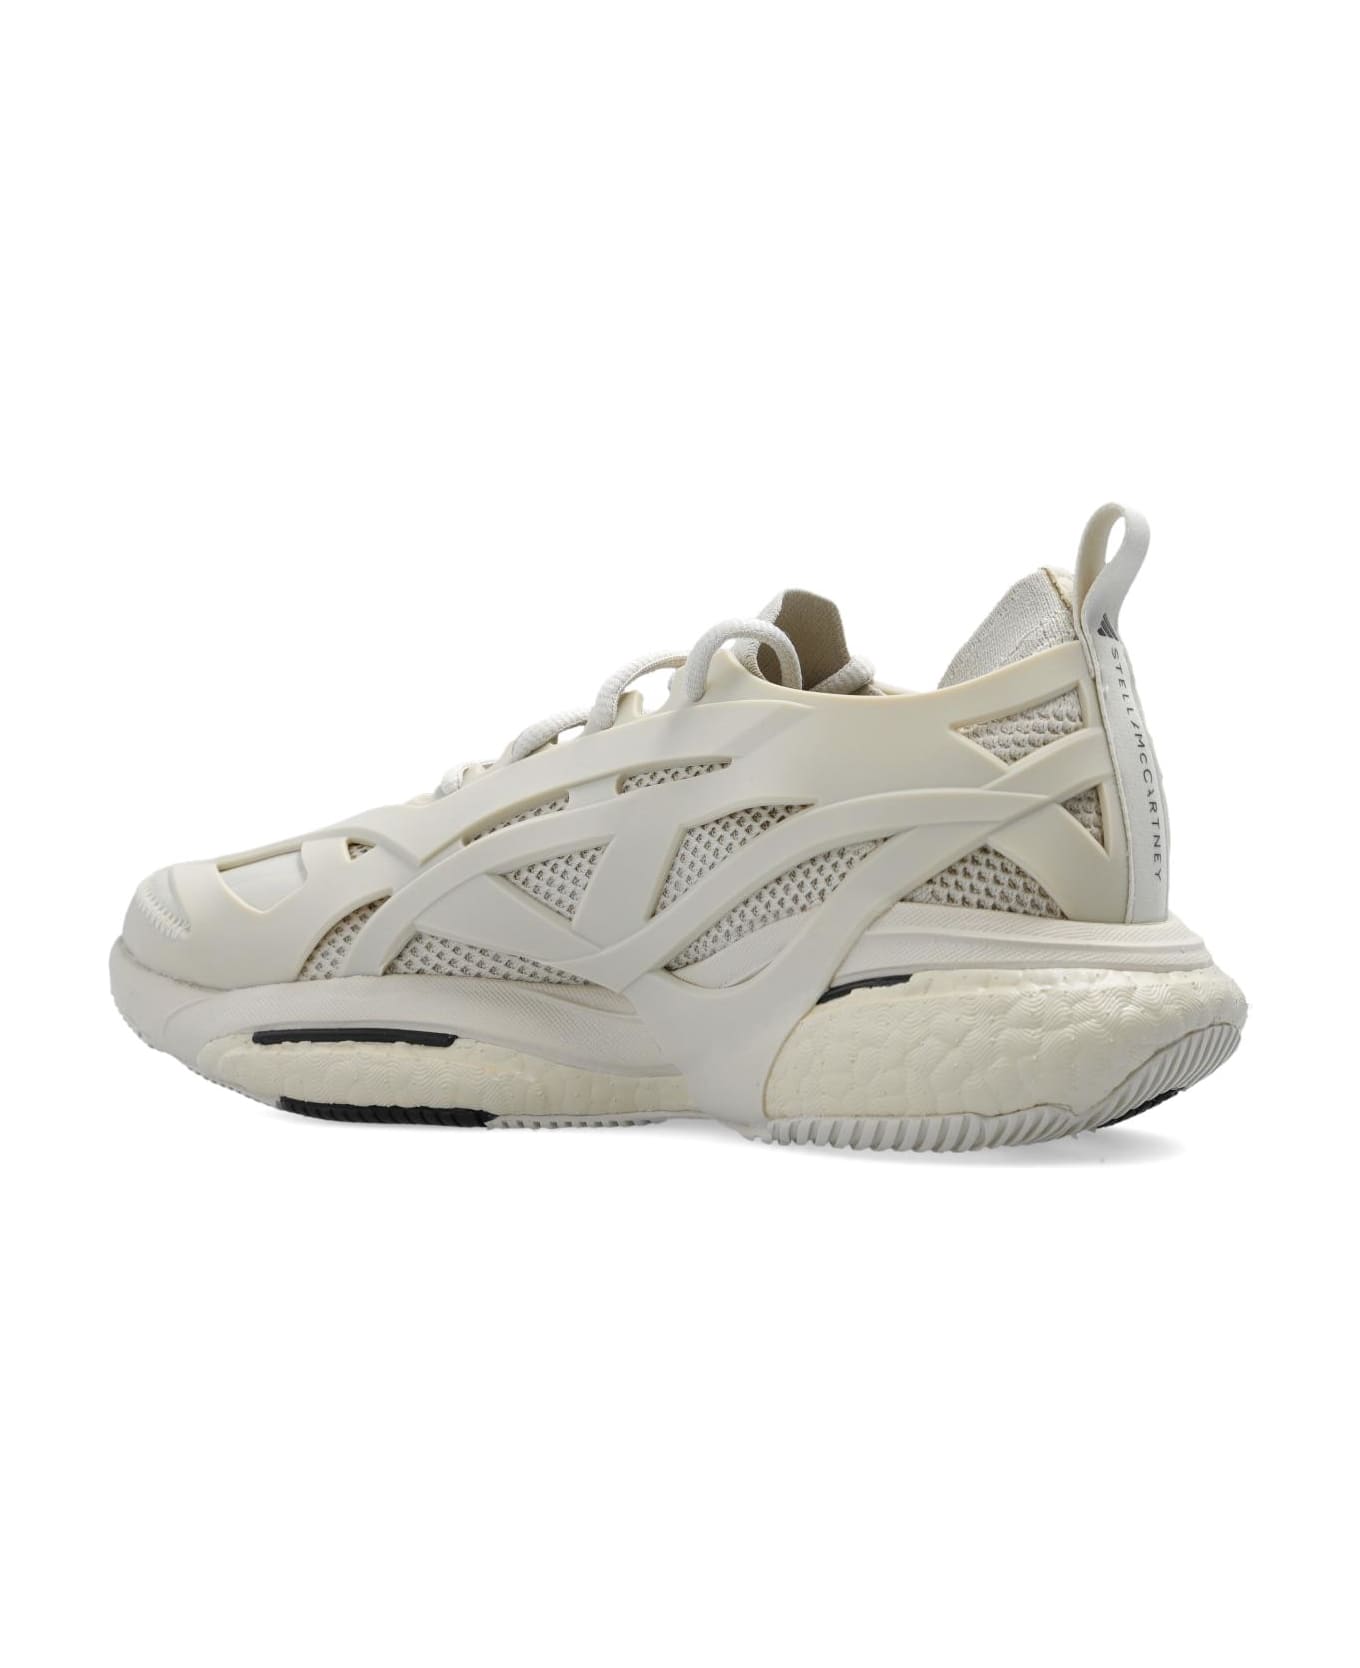 Adidas by Stella McCartney 'solarglide' Sneakers - Gobi Black スニーカー